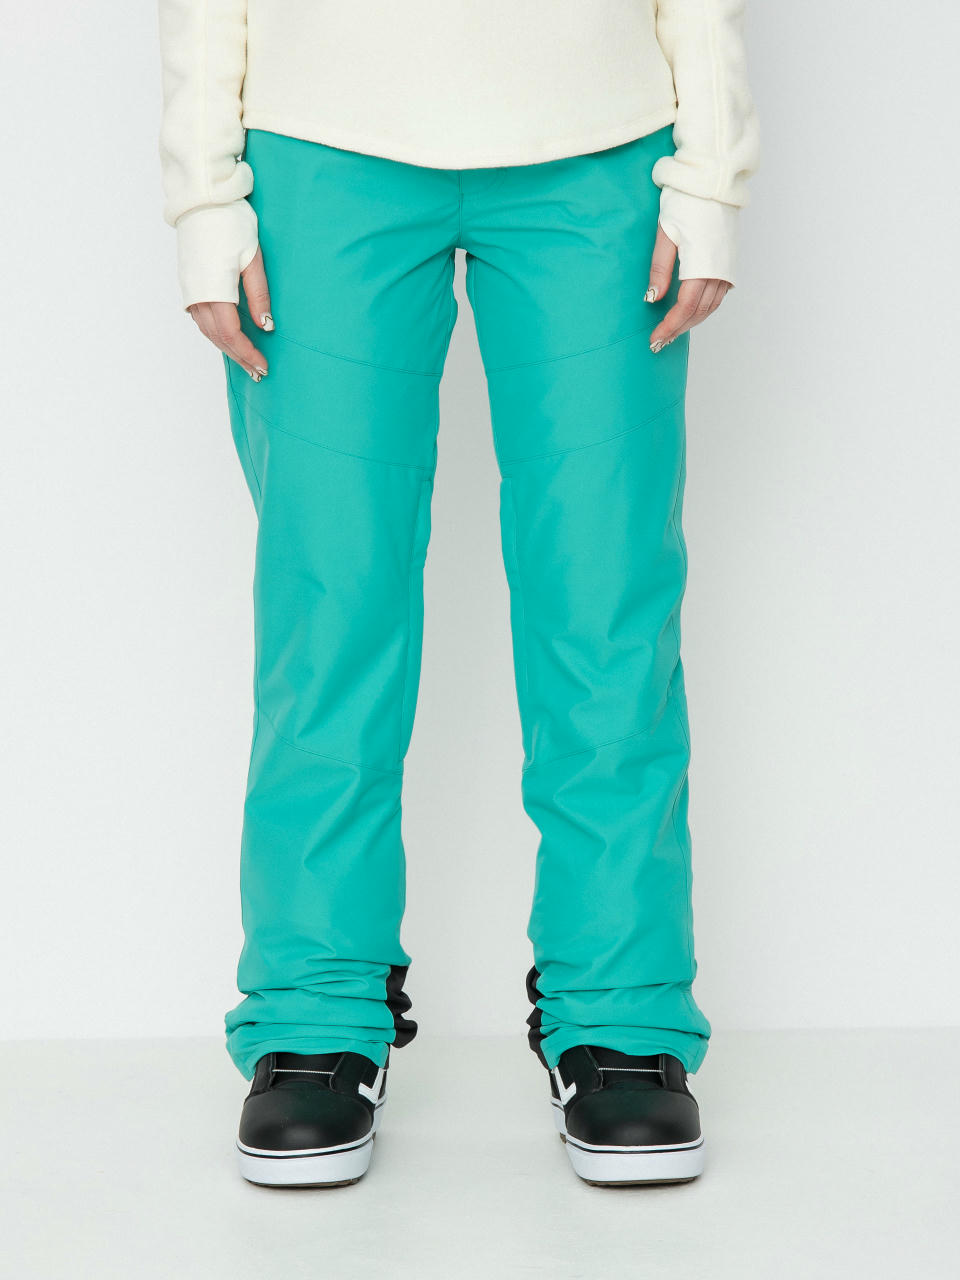 Roxy Passive Lines Snowboard pants Wmn (cameo green)